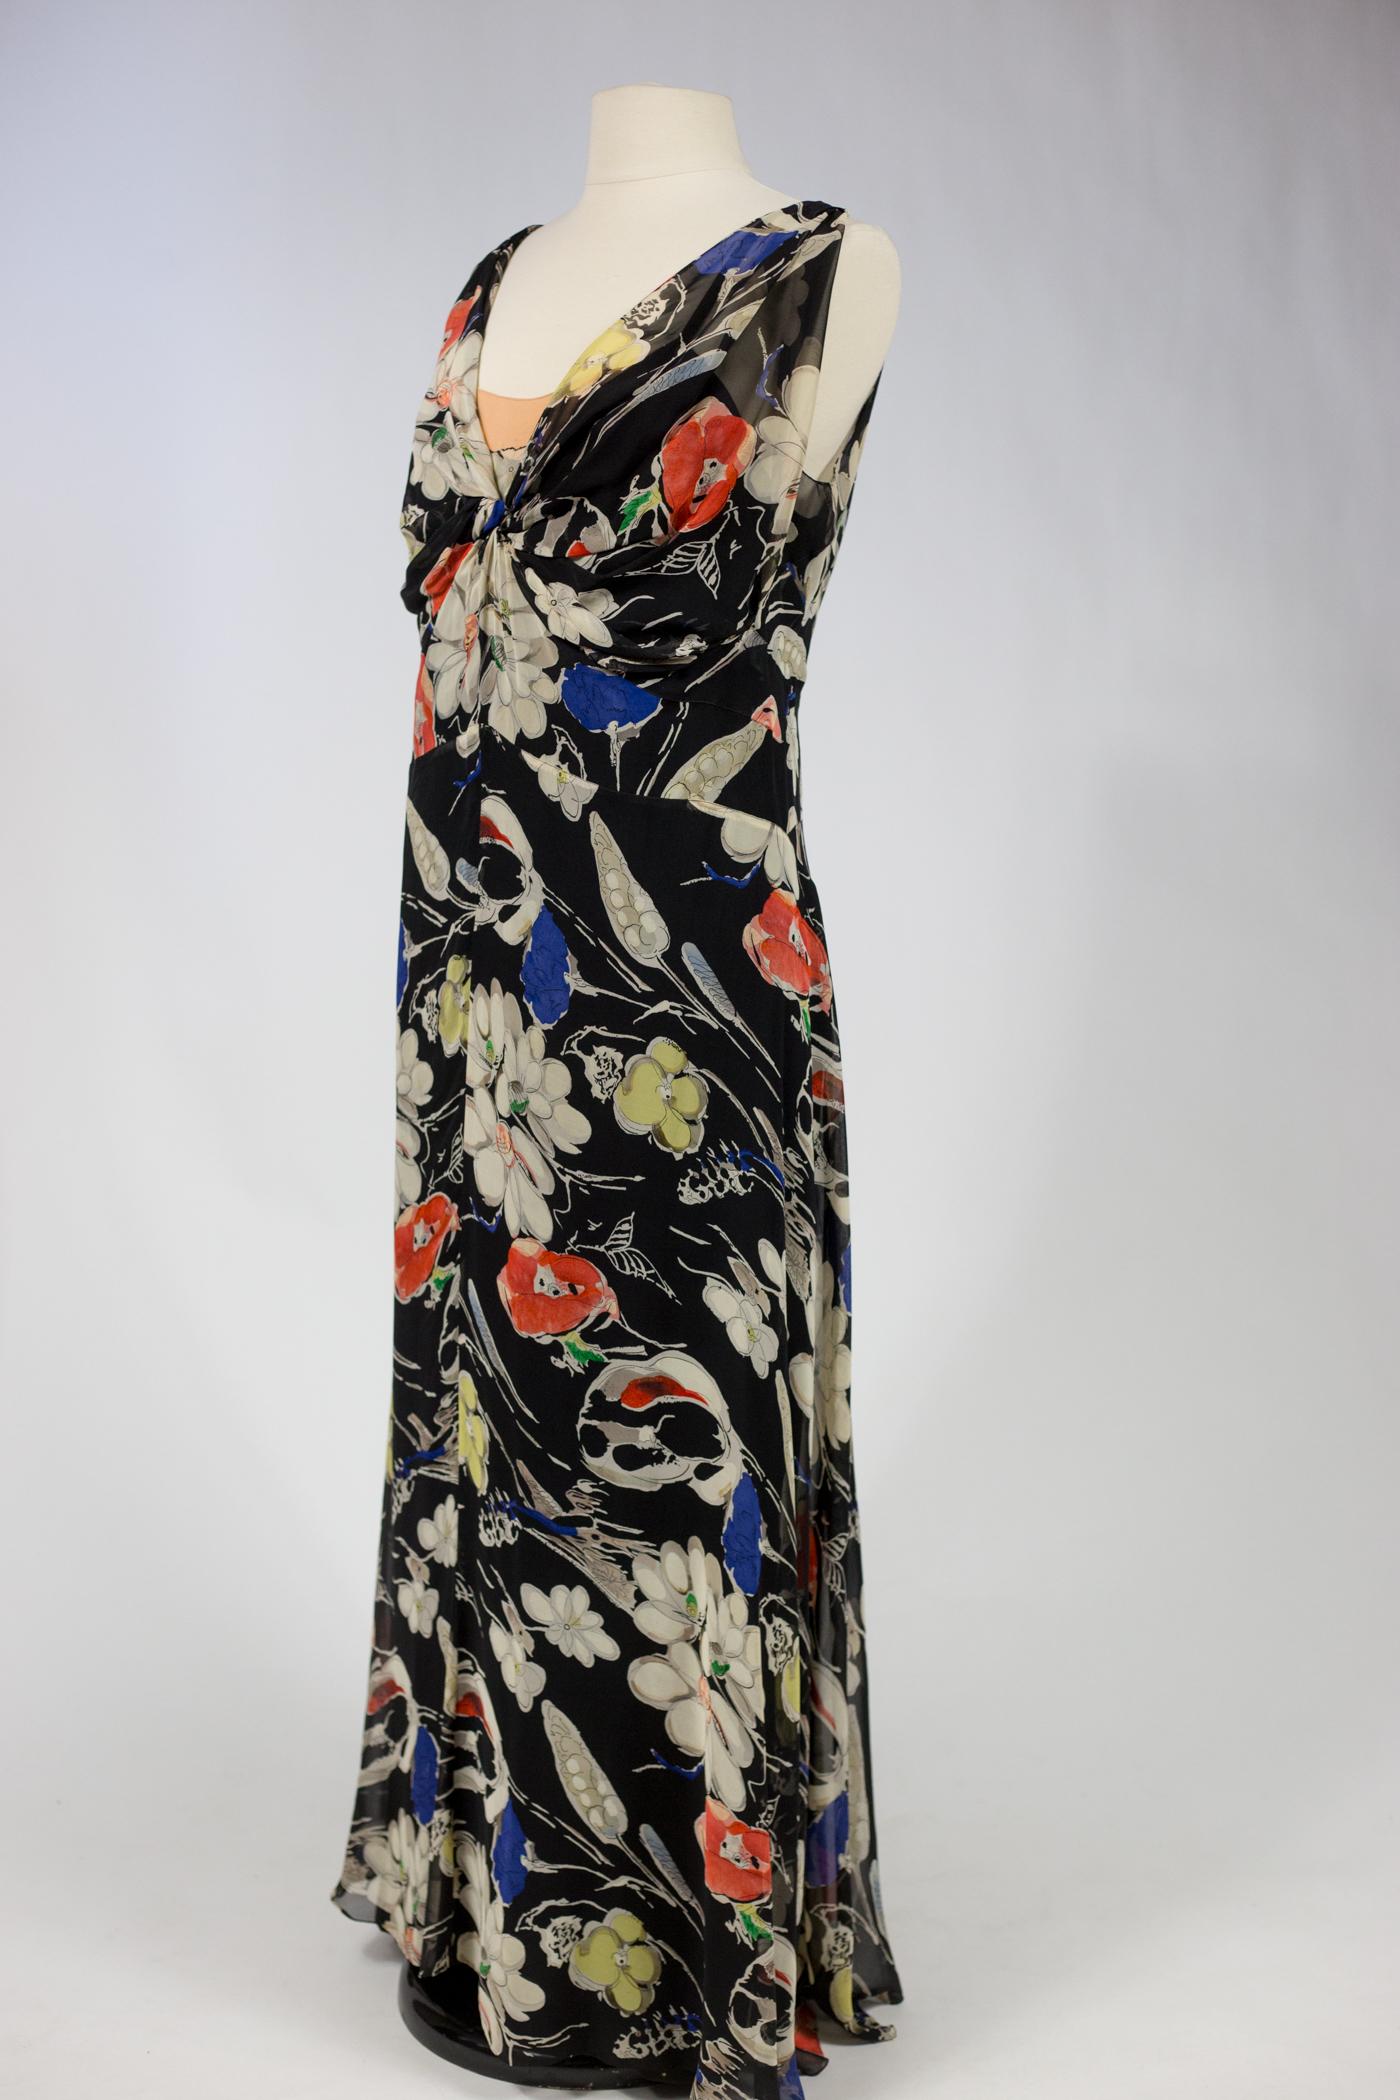 A French Printed Silk Chiffon Dress in the taste of Molyneux Circa 1935/1940 5